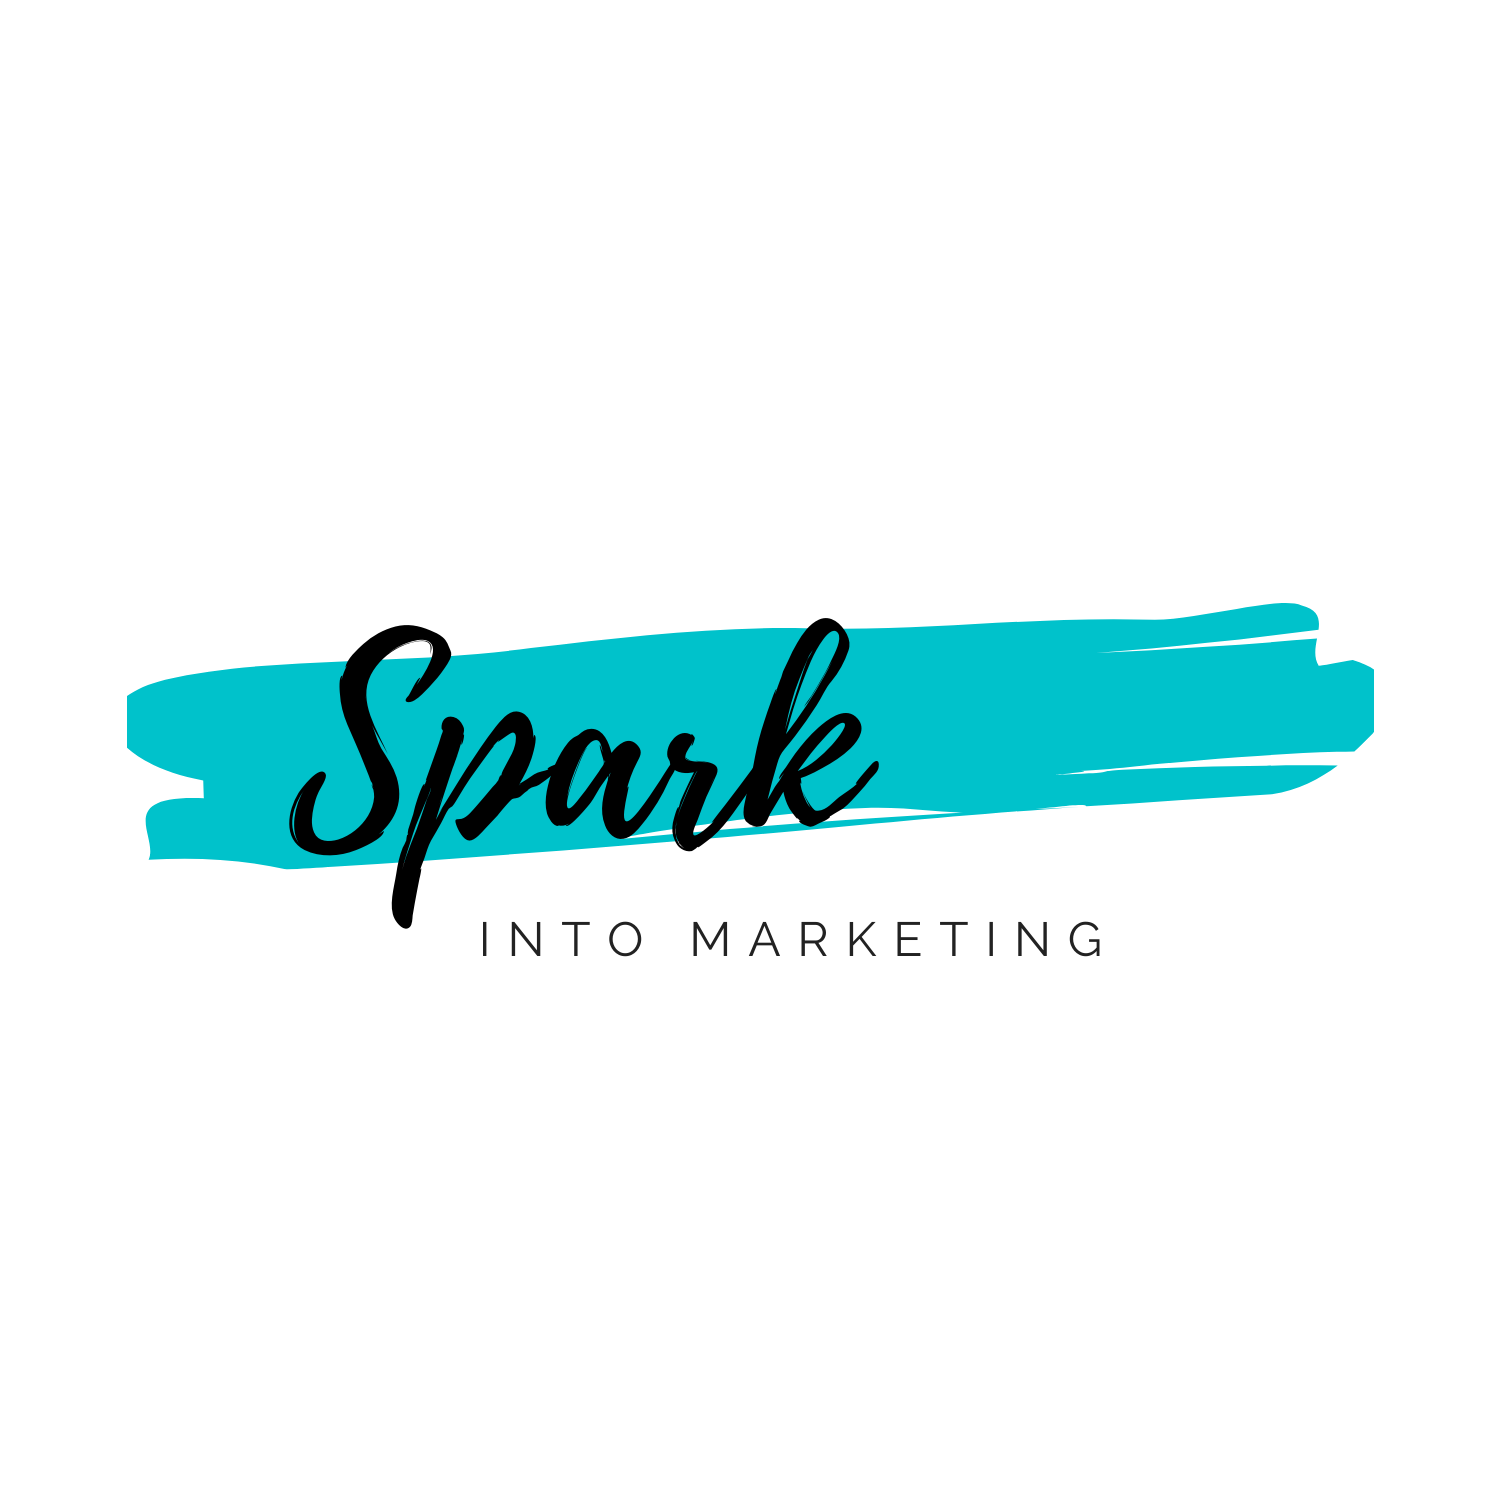 Spark into Marketing